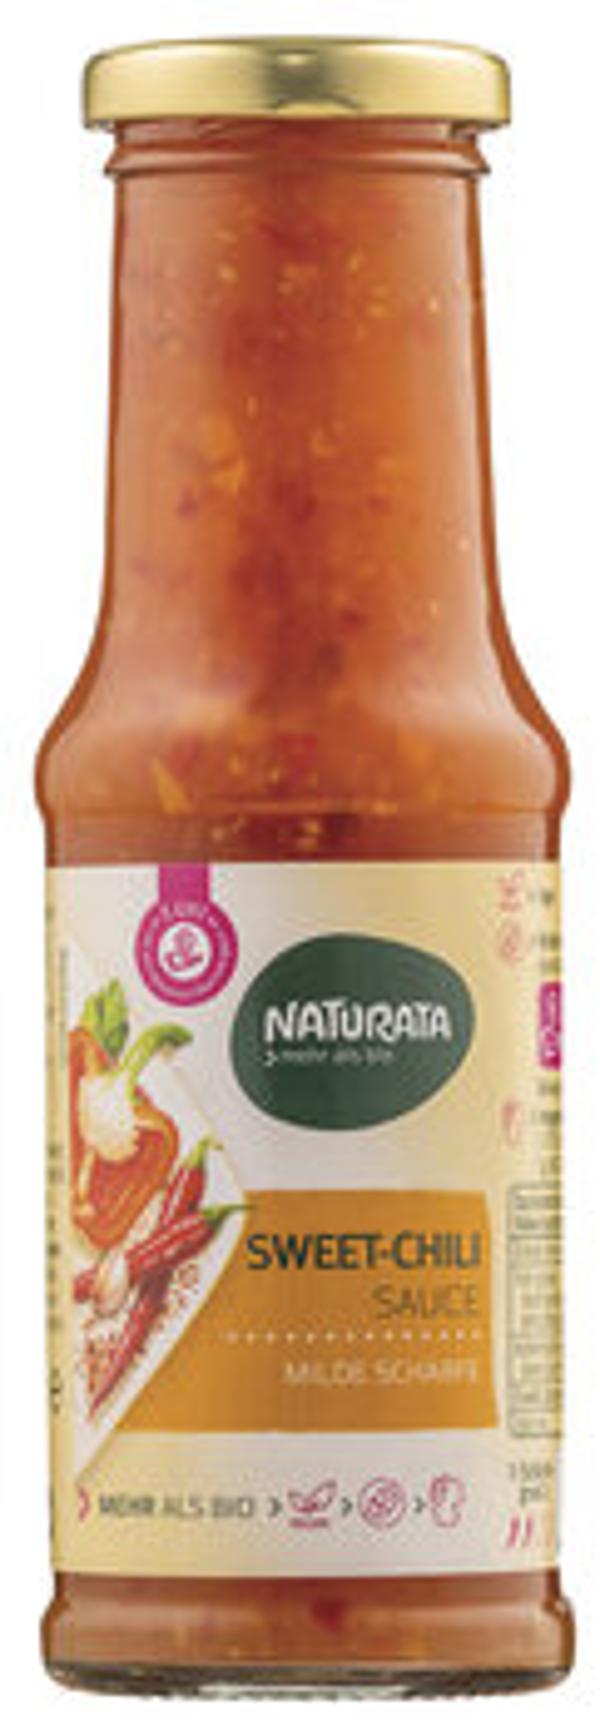 Produktfoto zu Naturata Sweet Chili Sauce 250ml